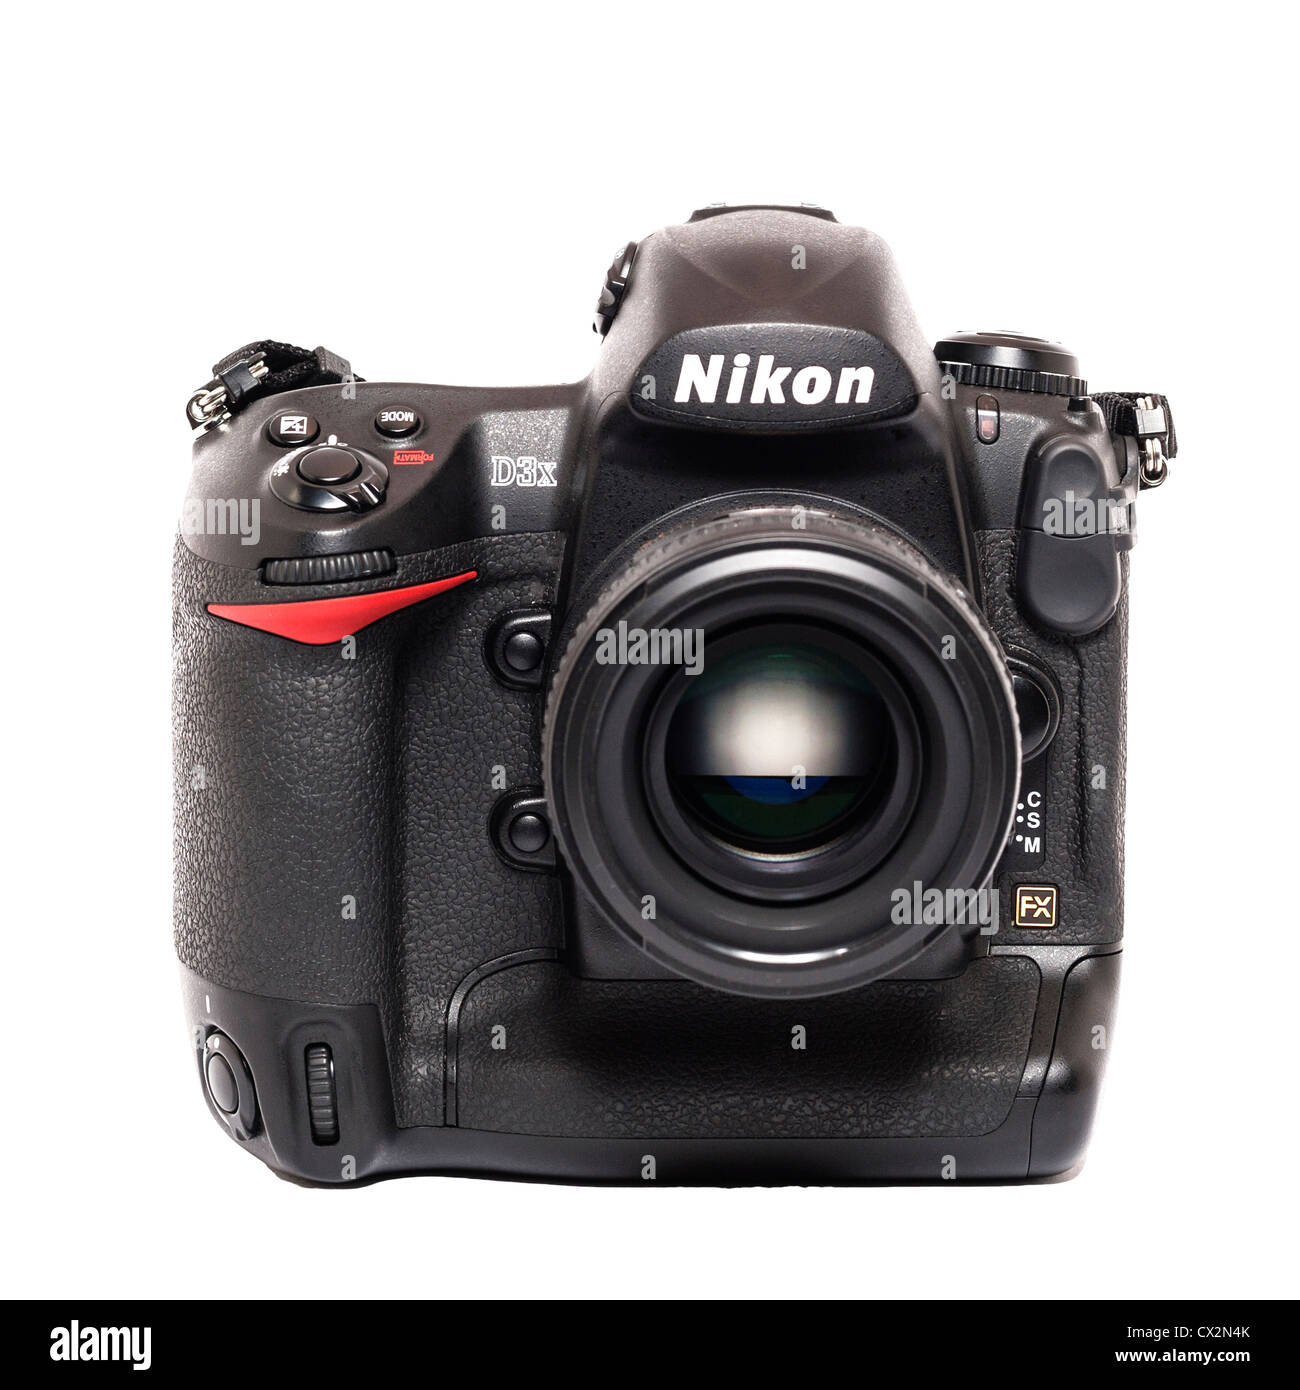 Nikon d3x hi-res stock photography and images - Alamy